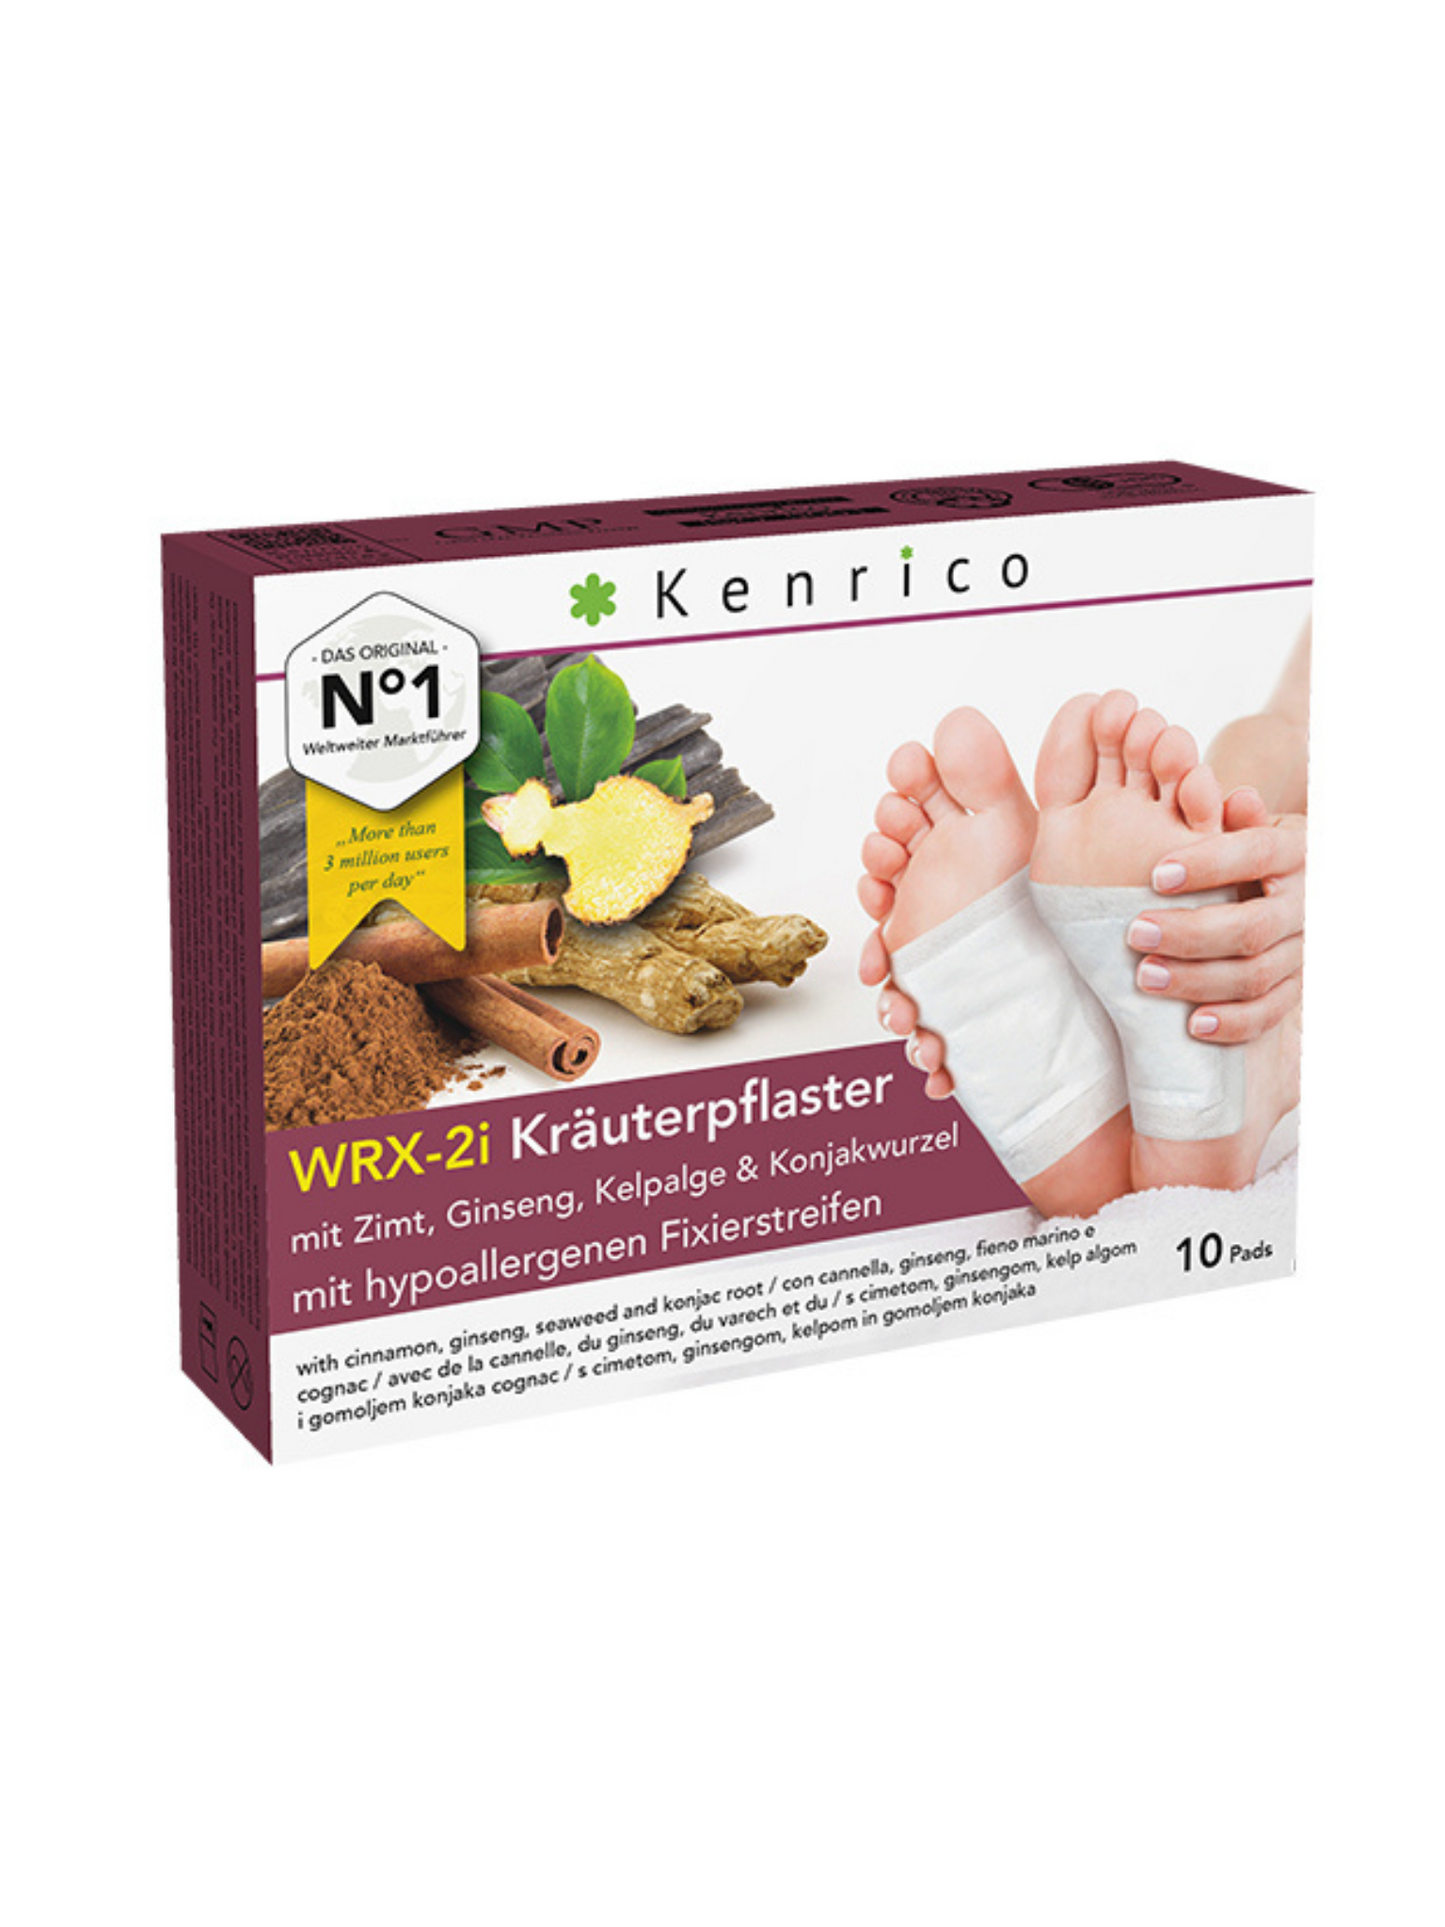 Kenrico® WRX-2i Herbal Plaster with Cinnamon, Ginseng, Kelp & Konjac Root